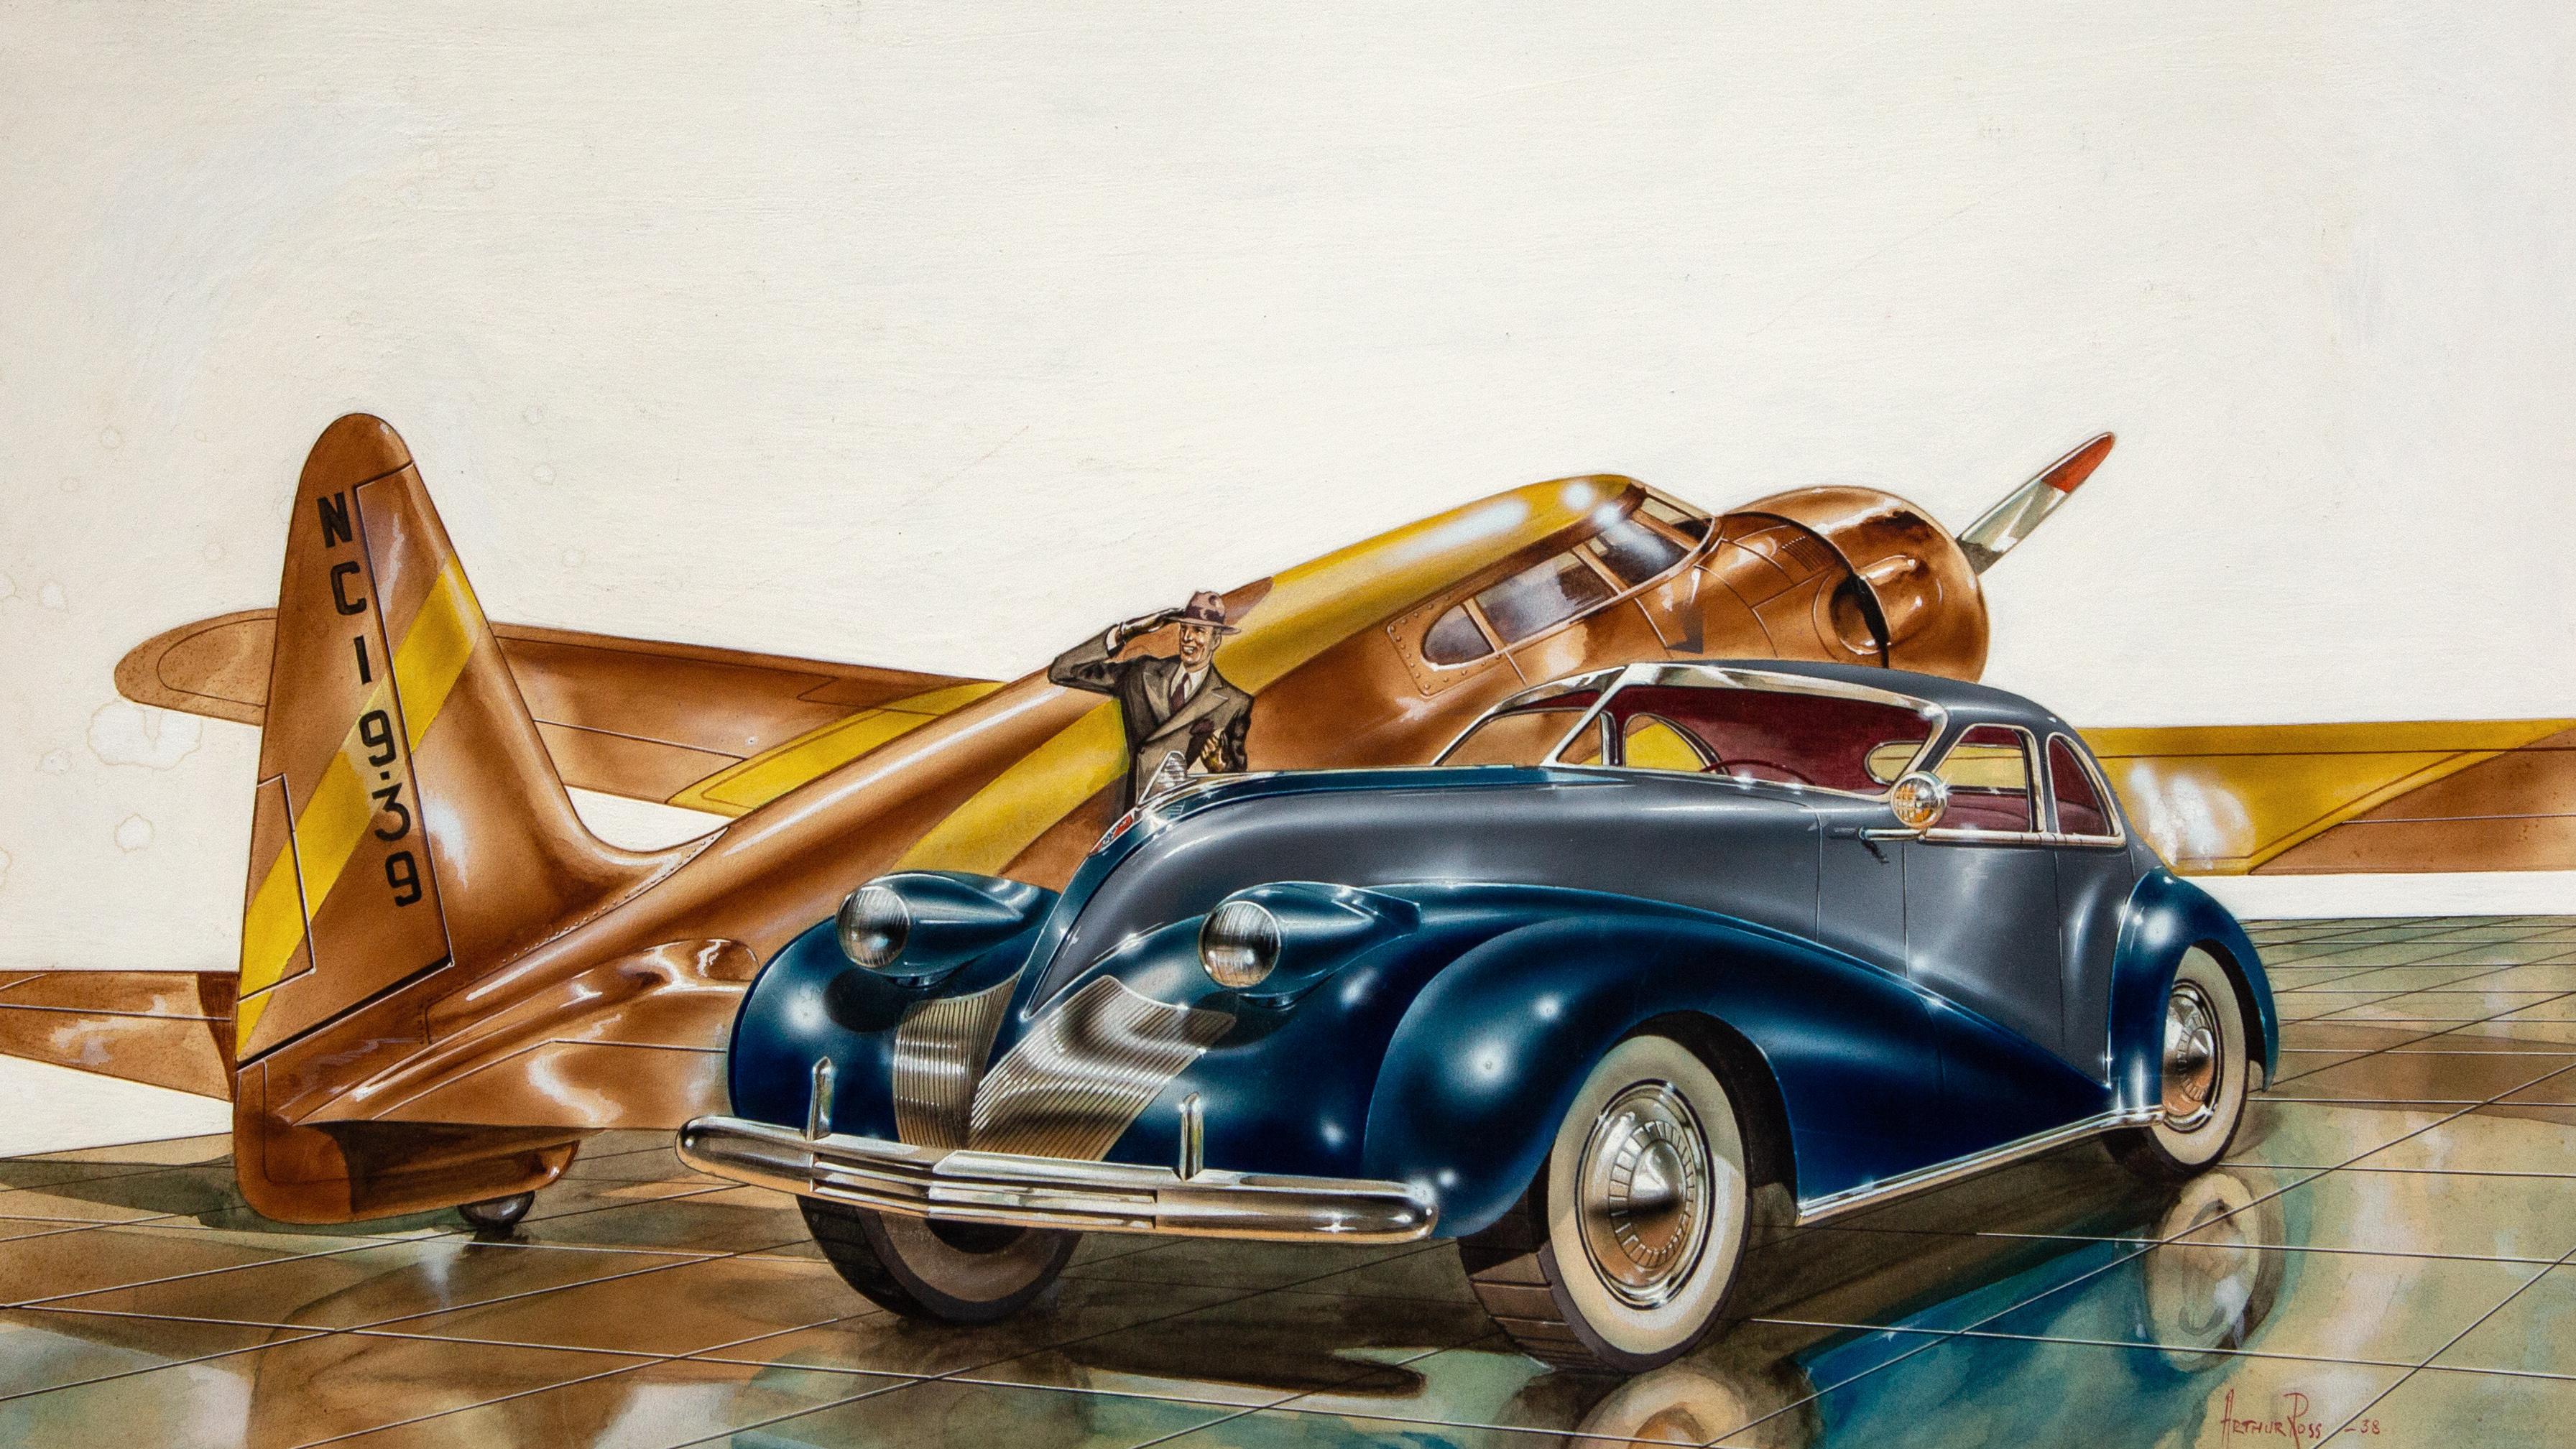 Arthur Rosenman Ross Landscape Painting - “Concept Buick and Plane” American Art Deco 20th Century Modernism Machine Age